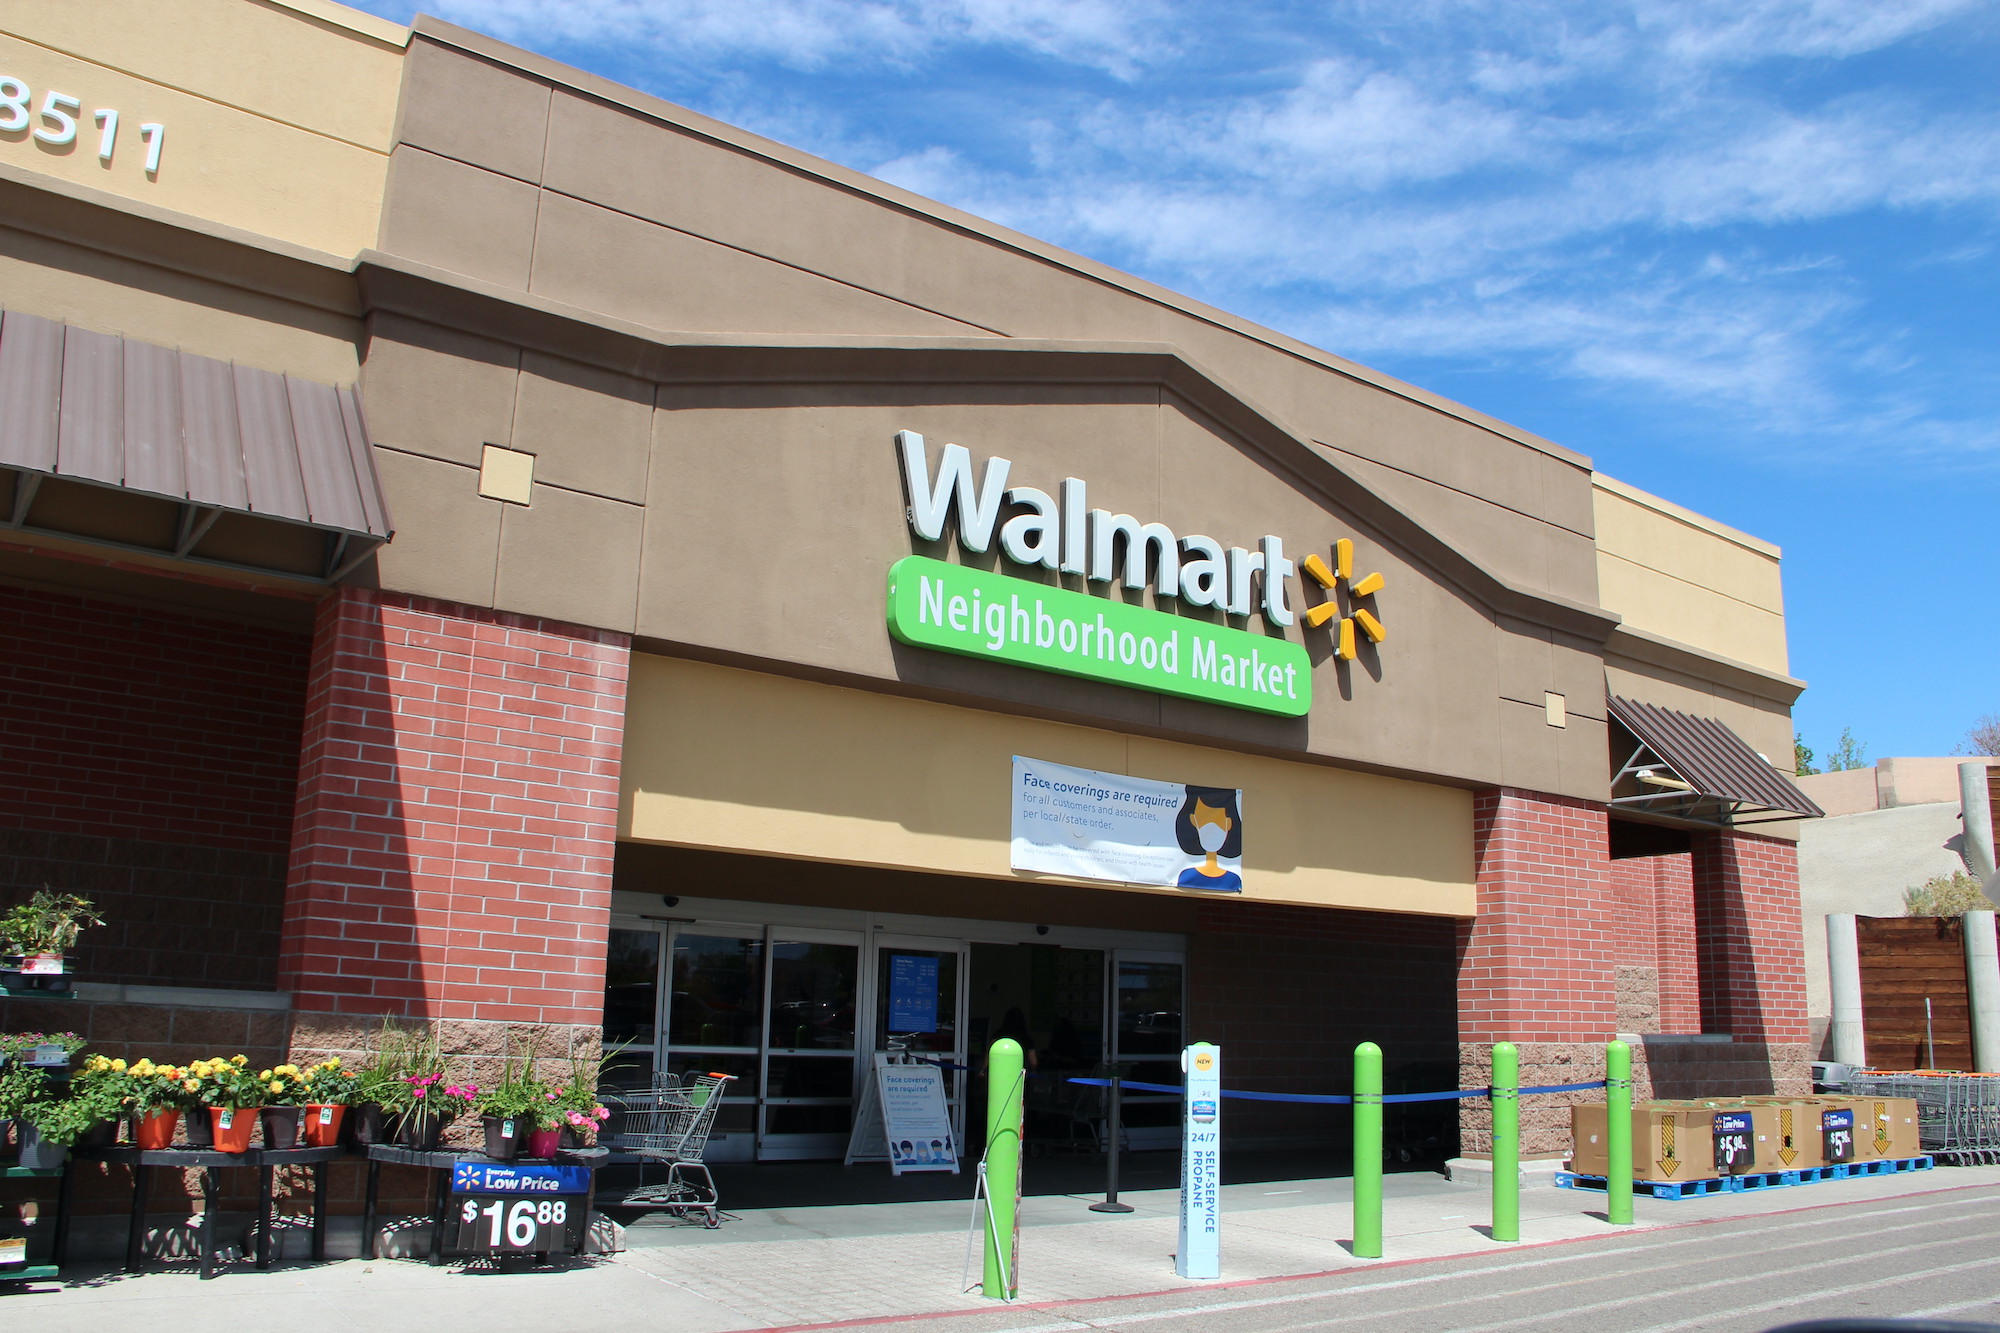 Picture of Walmart Neighborhood Market 8511 Golf Course Rd NW, Albuquerque, NM 87114 